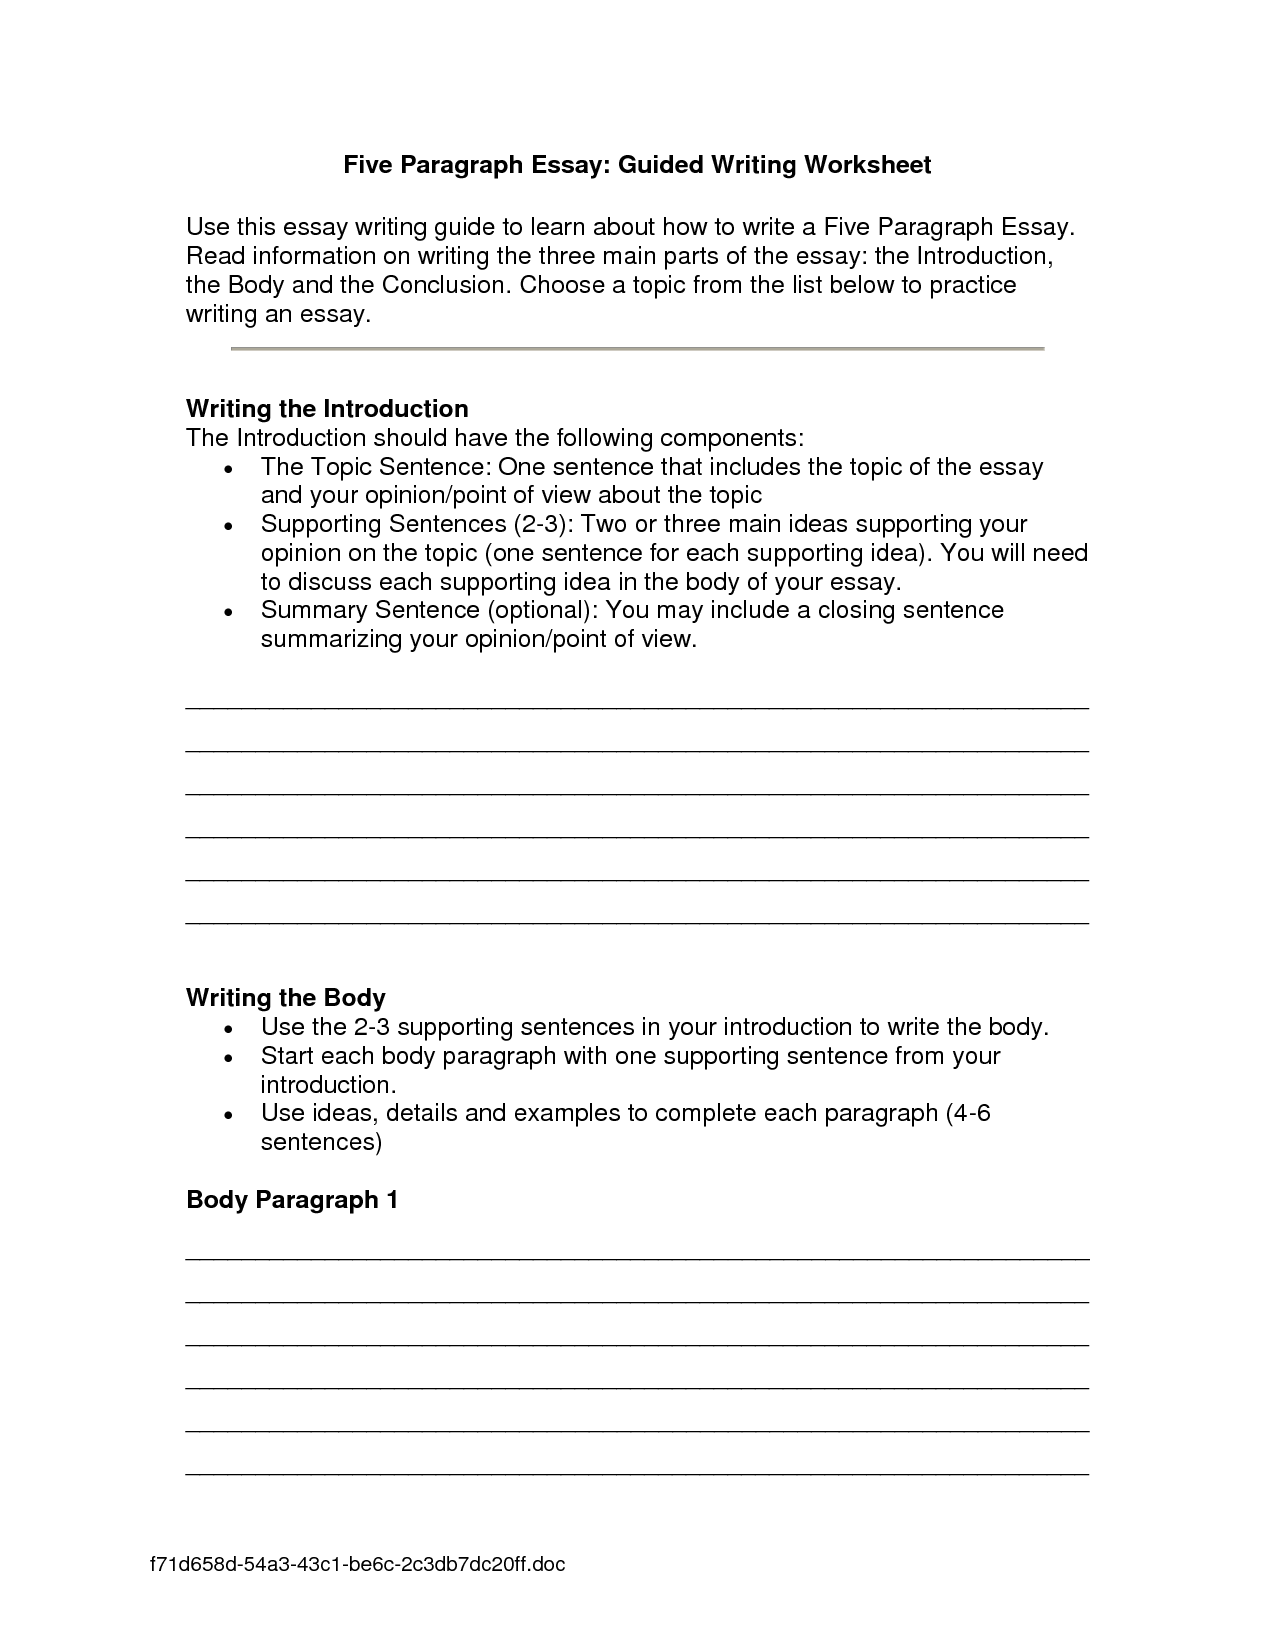 types of essay worksheets pdf